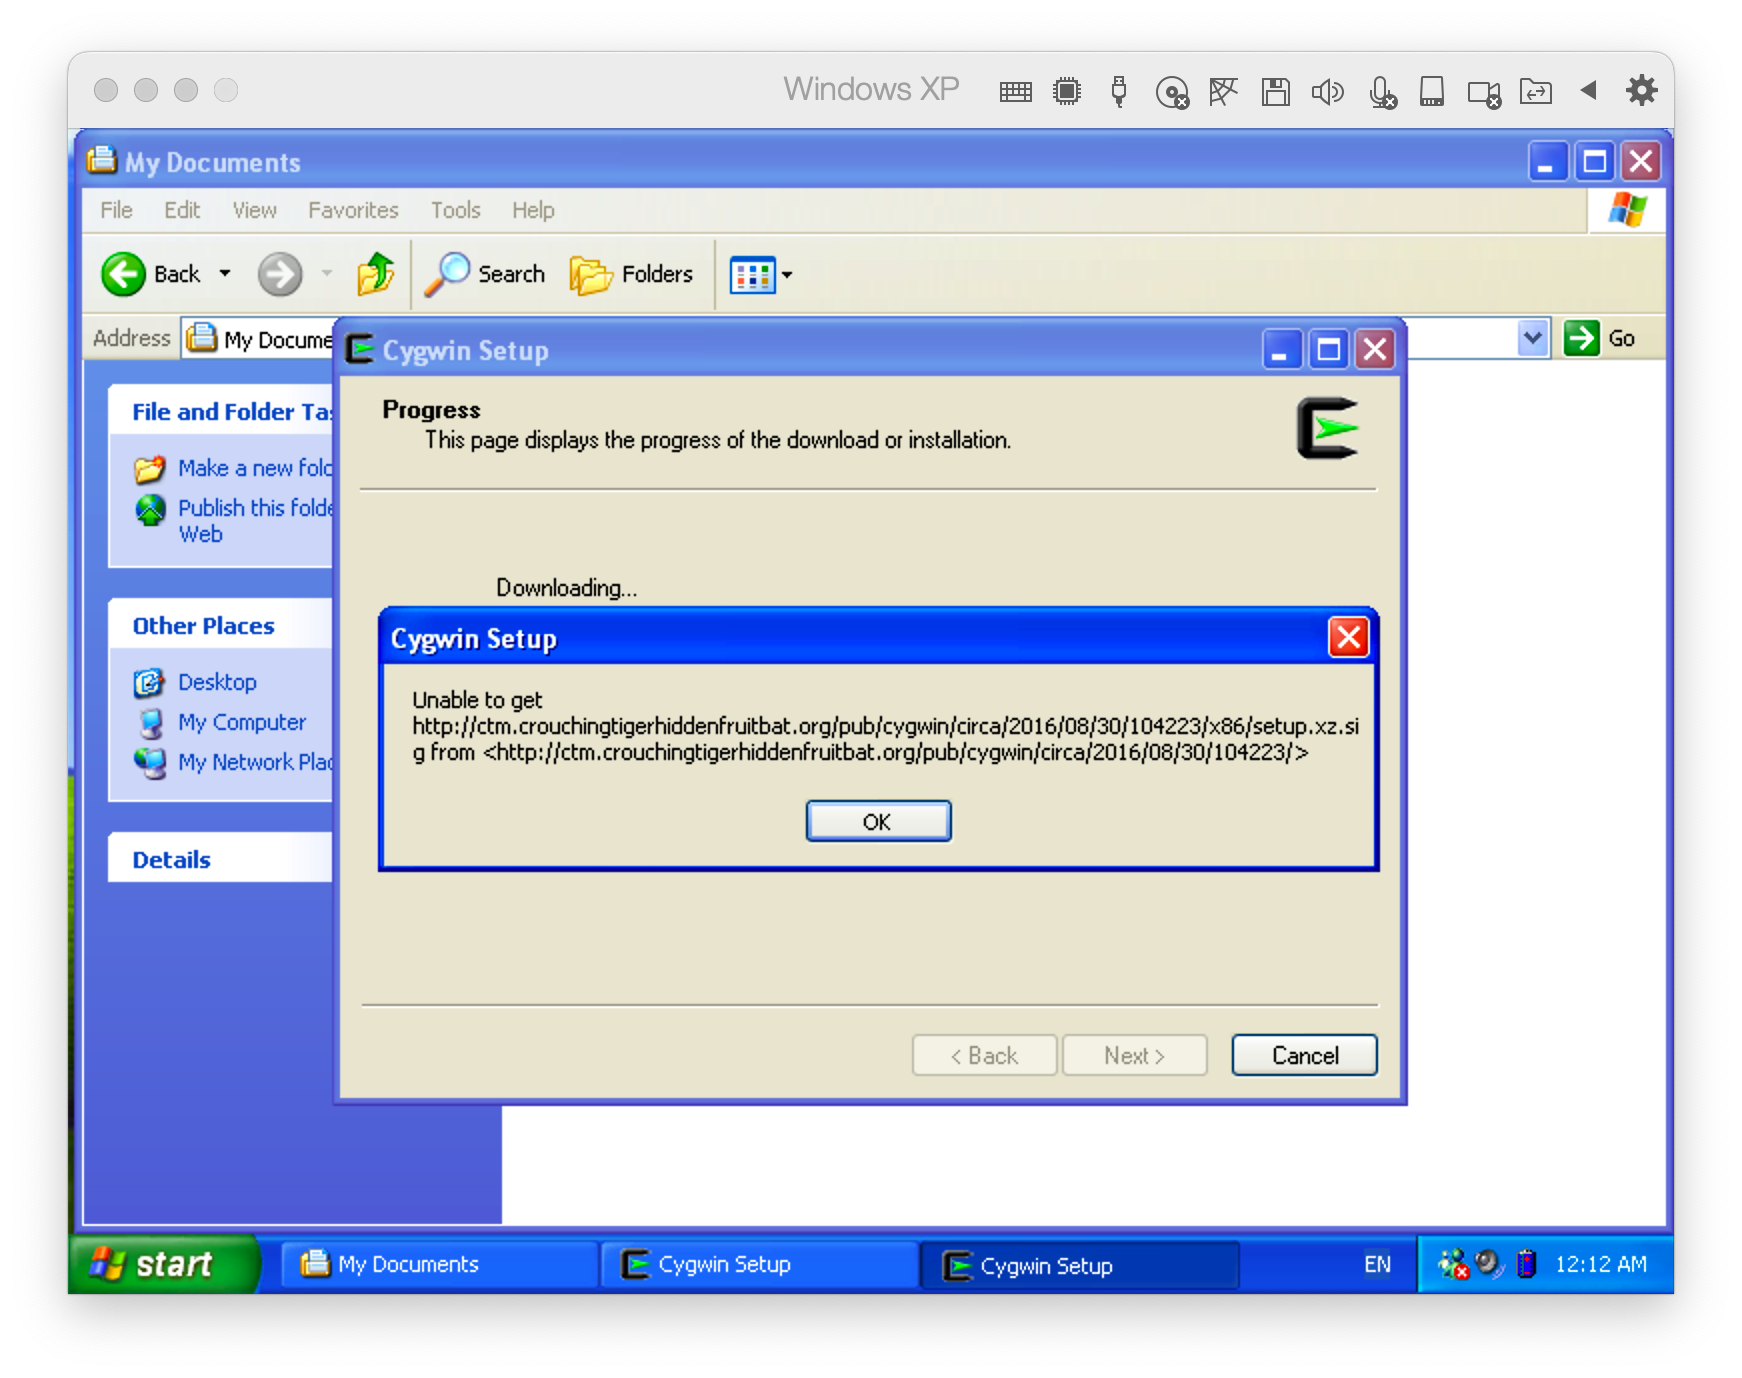 Cygwin setup in Windows XP